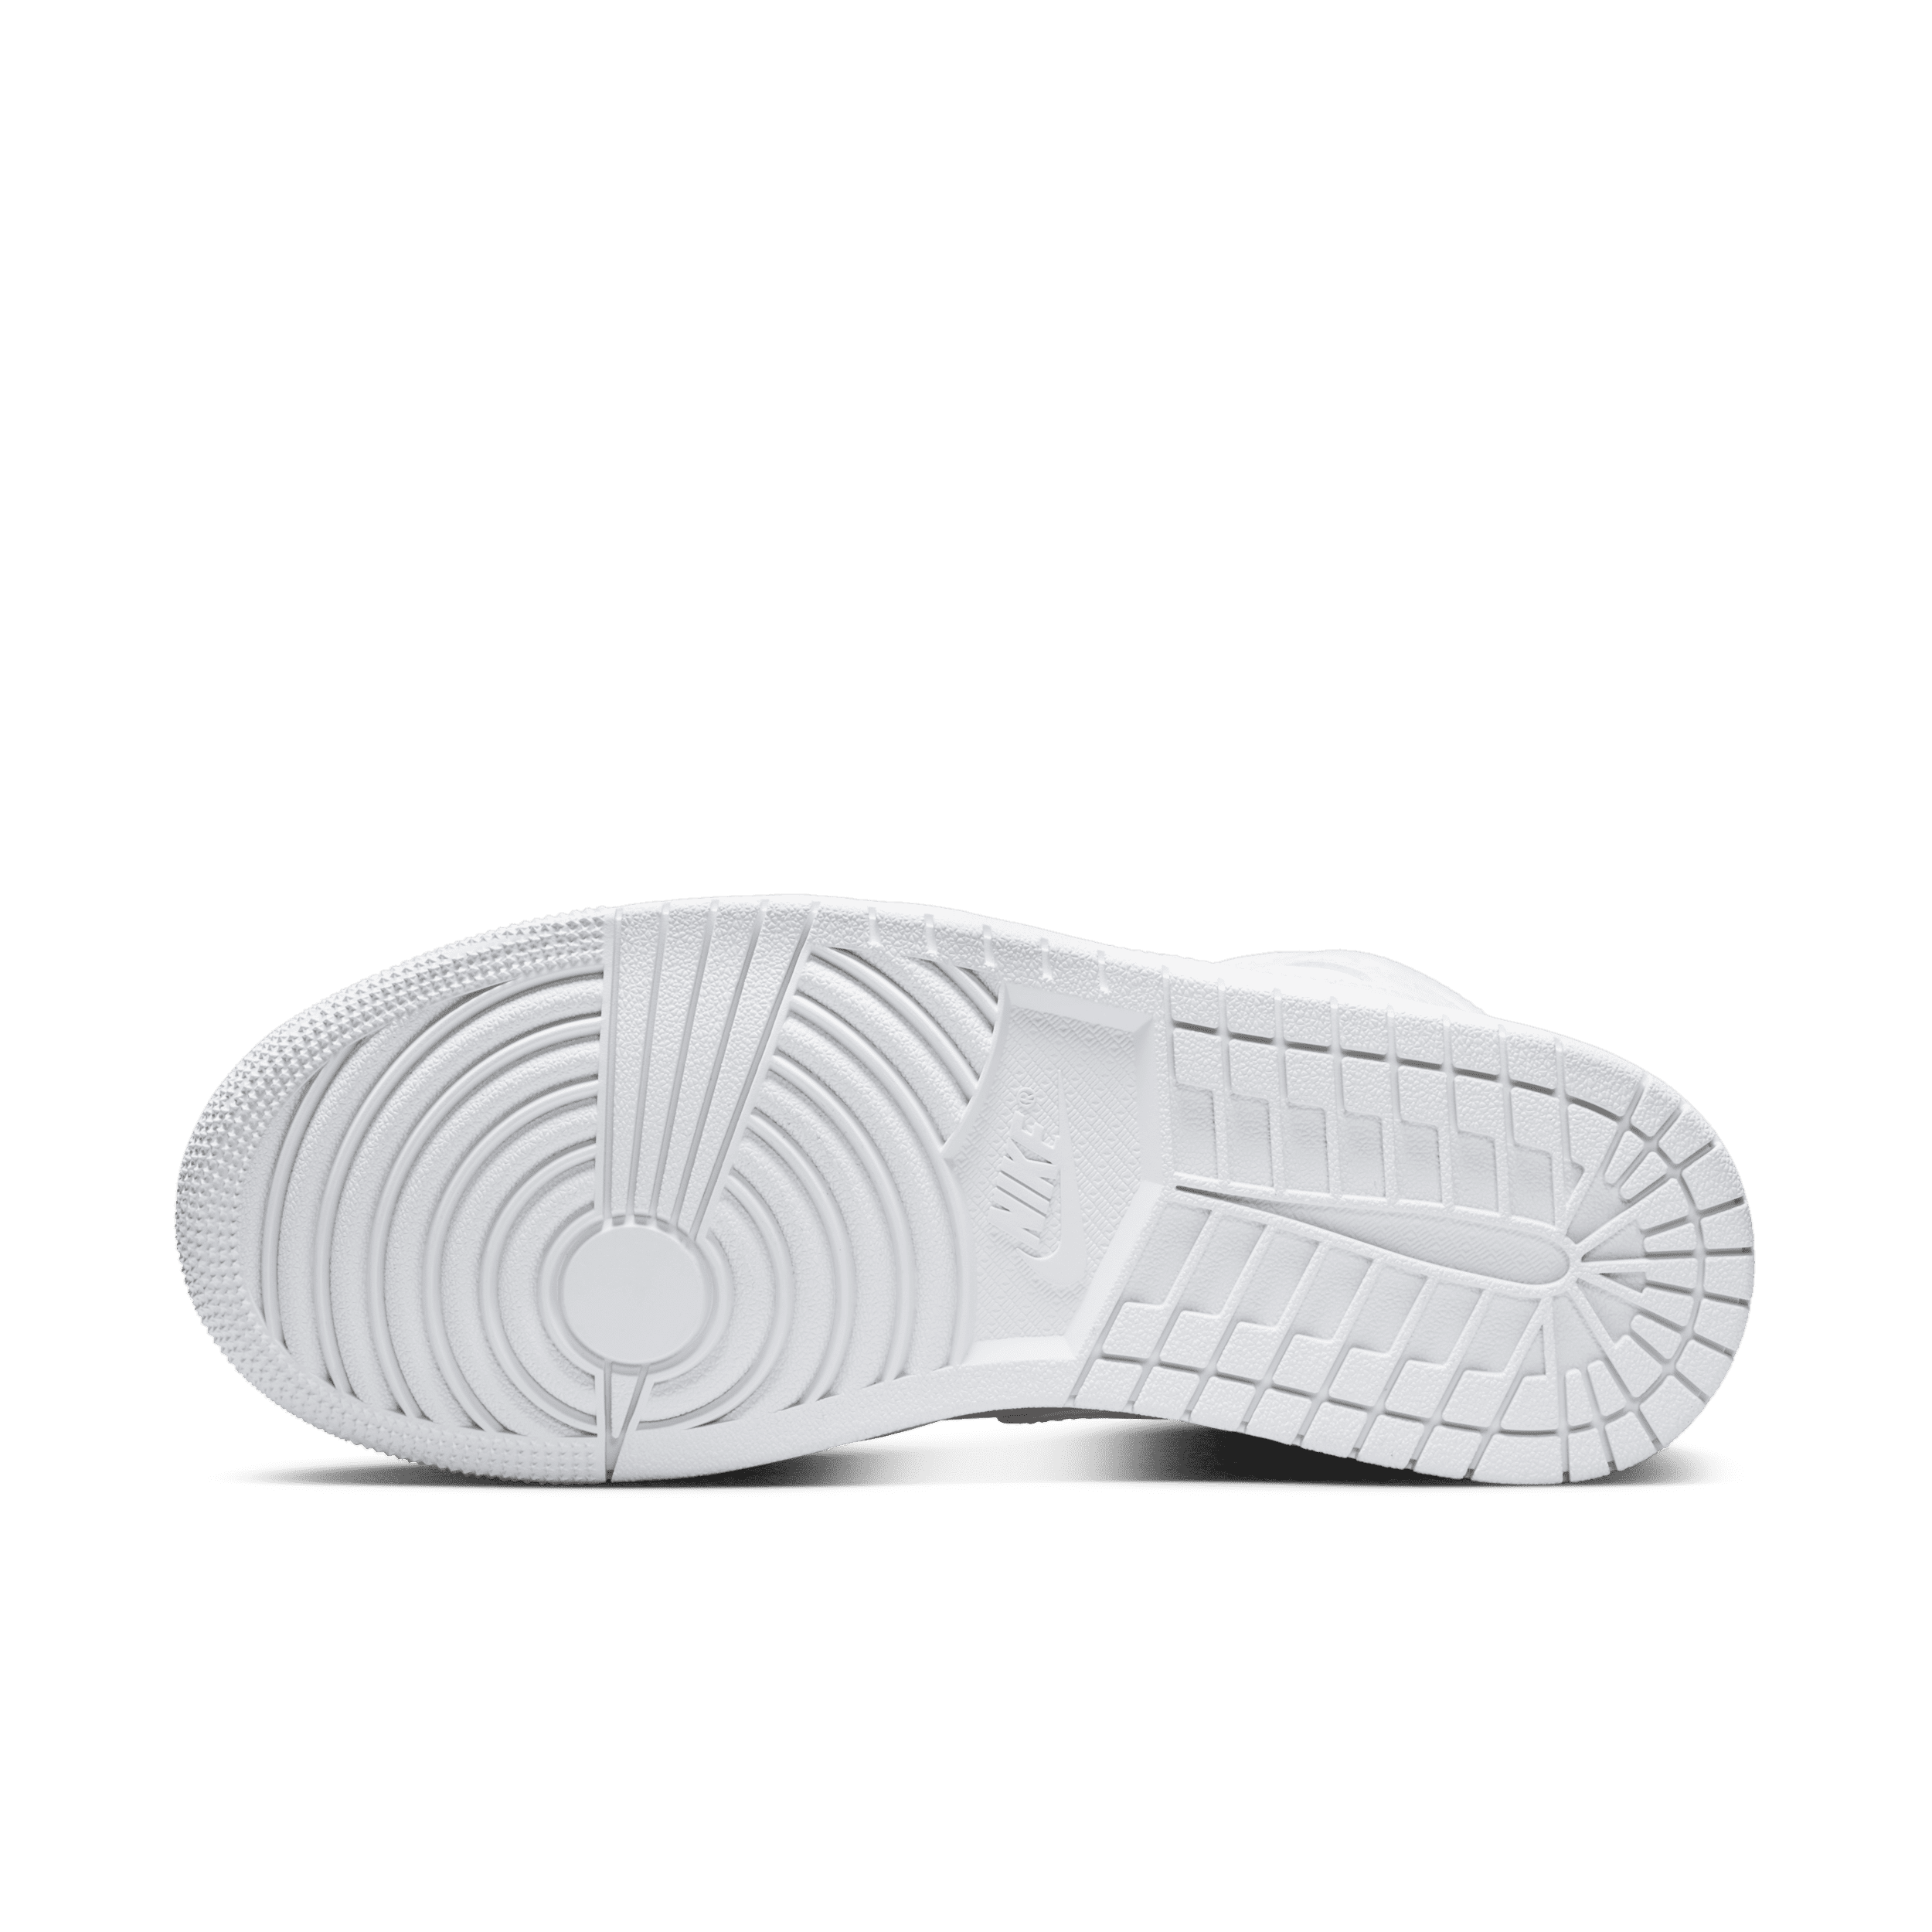 Air Jordan 1 Mid Damenschuh - Weiß